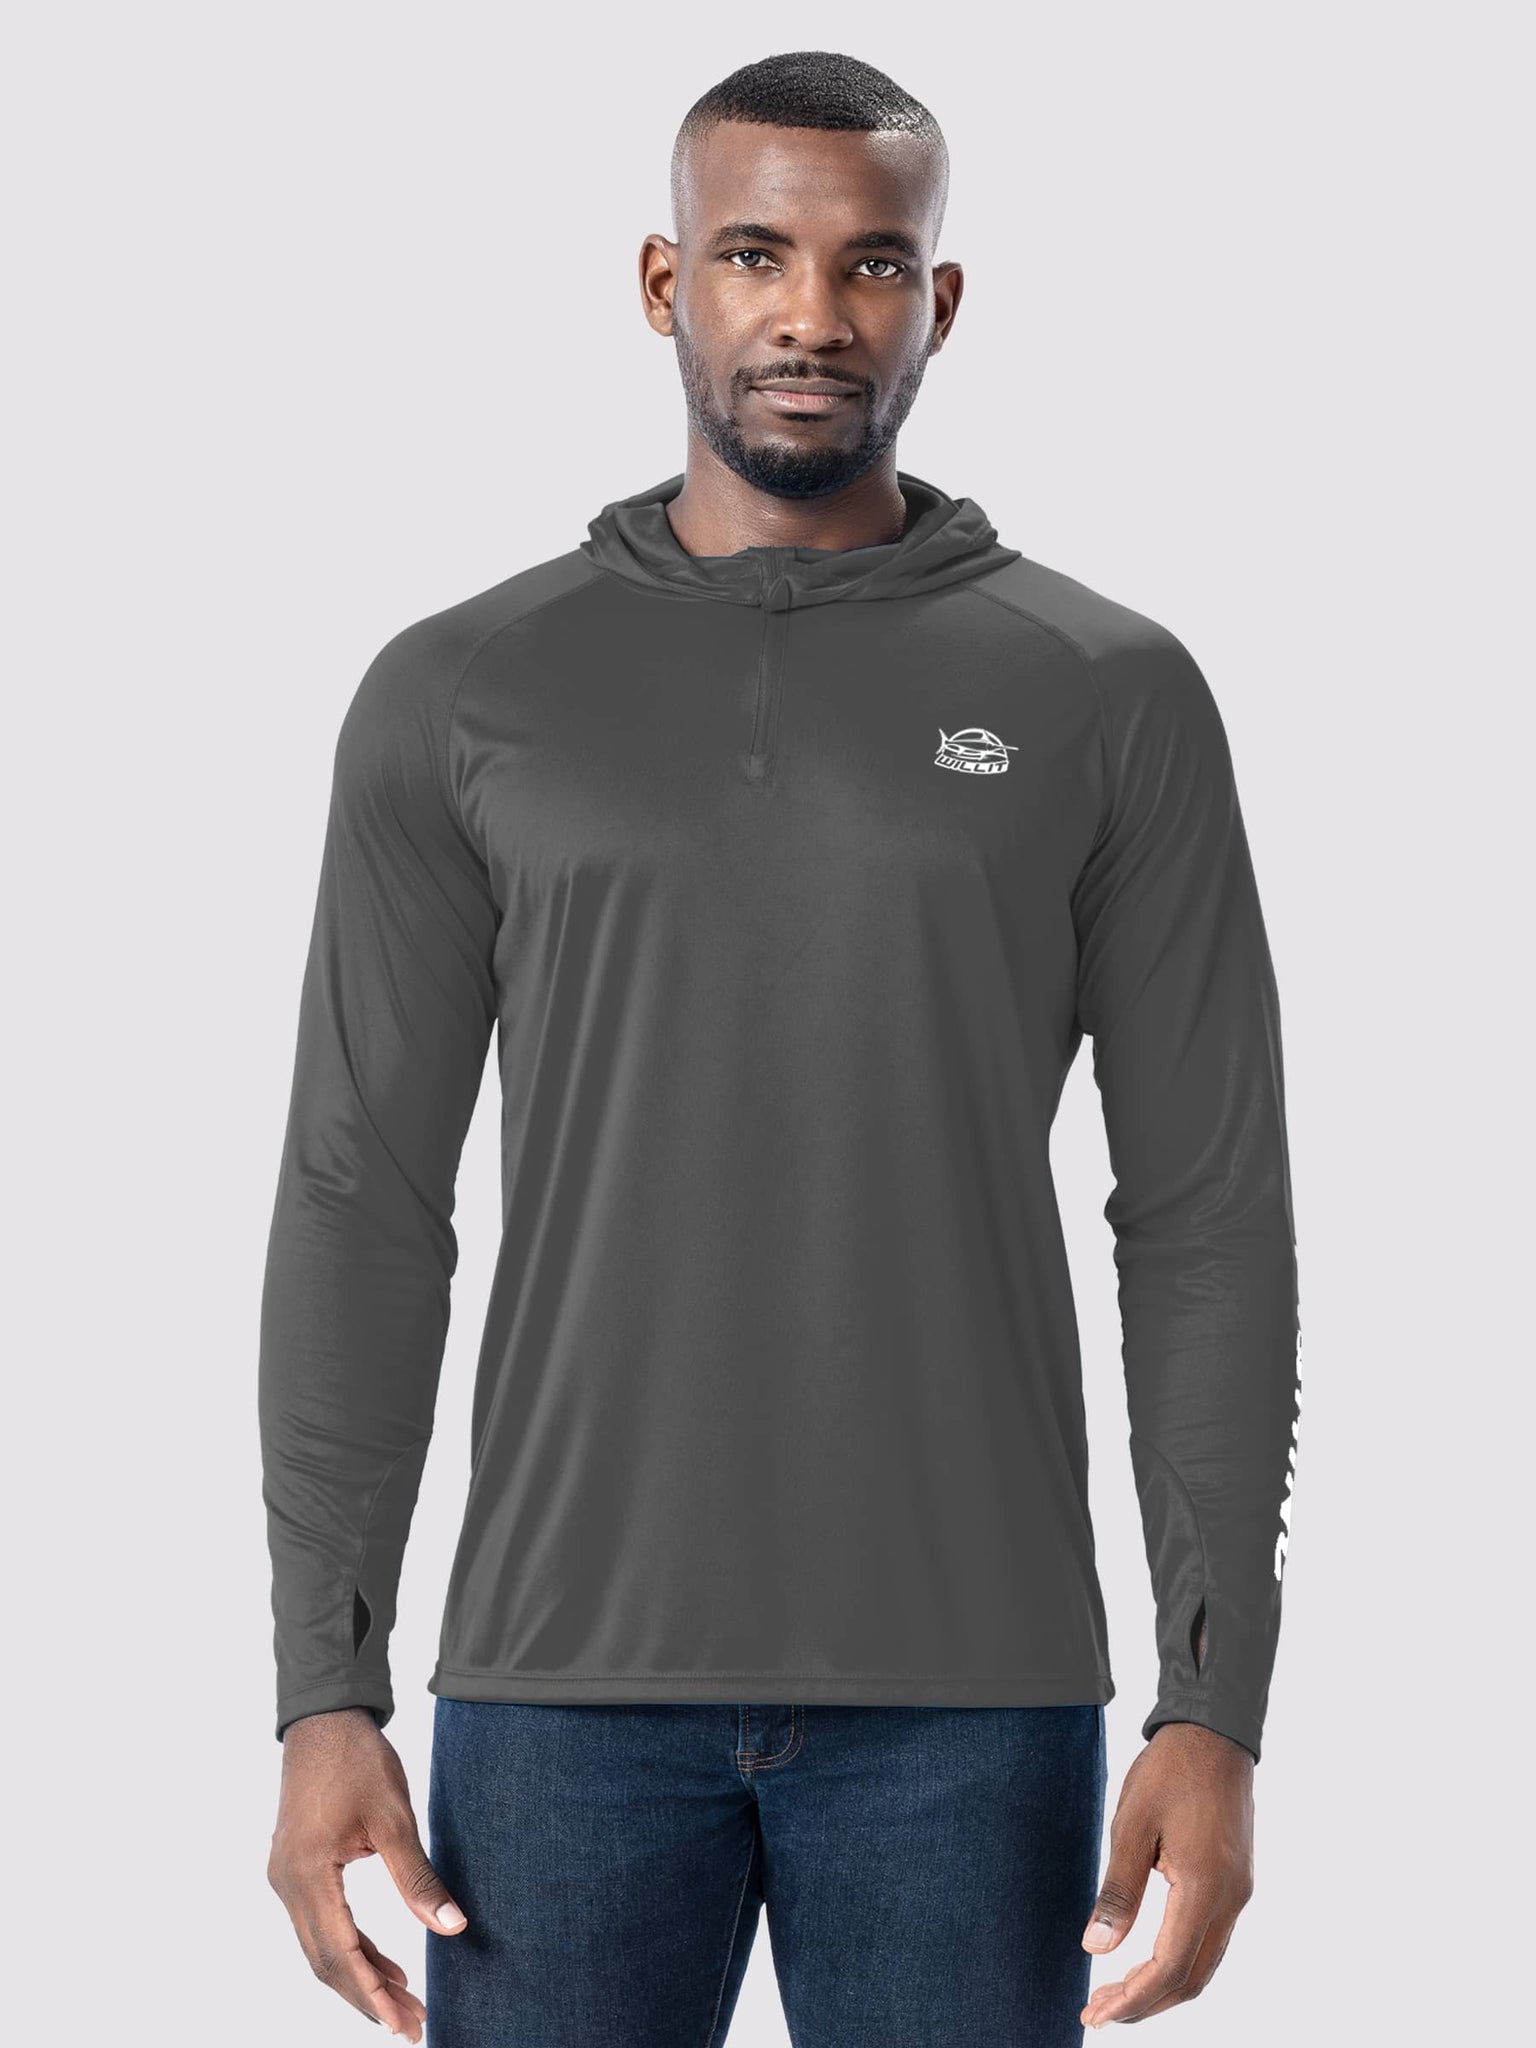 Willit Men's Quarter Zip Sun Shirts UPF 50+_DeepGray_model1